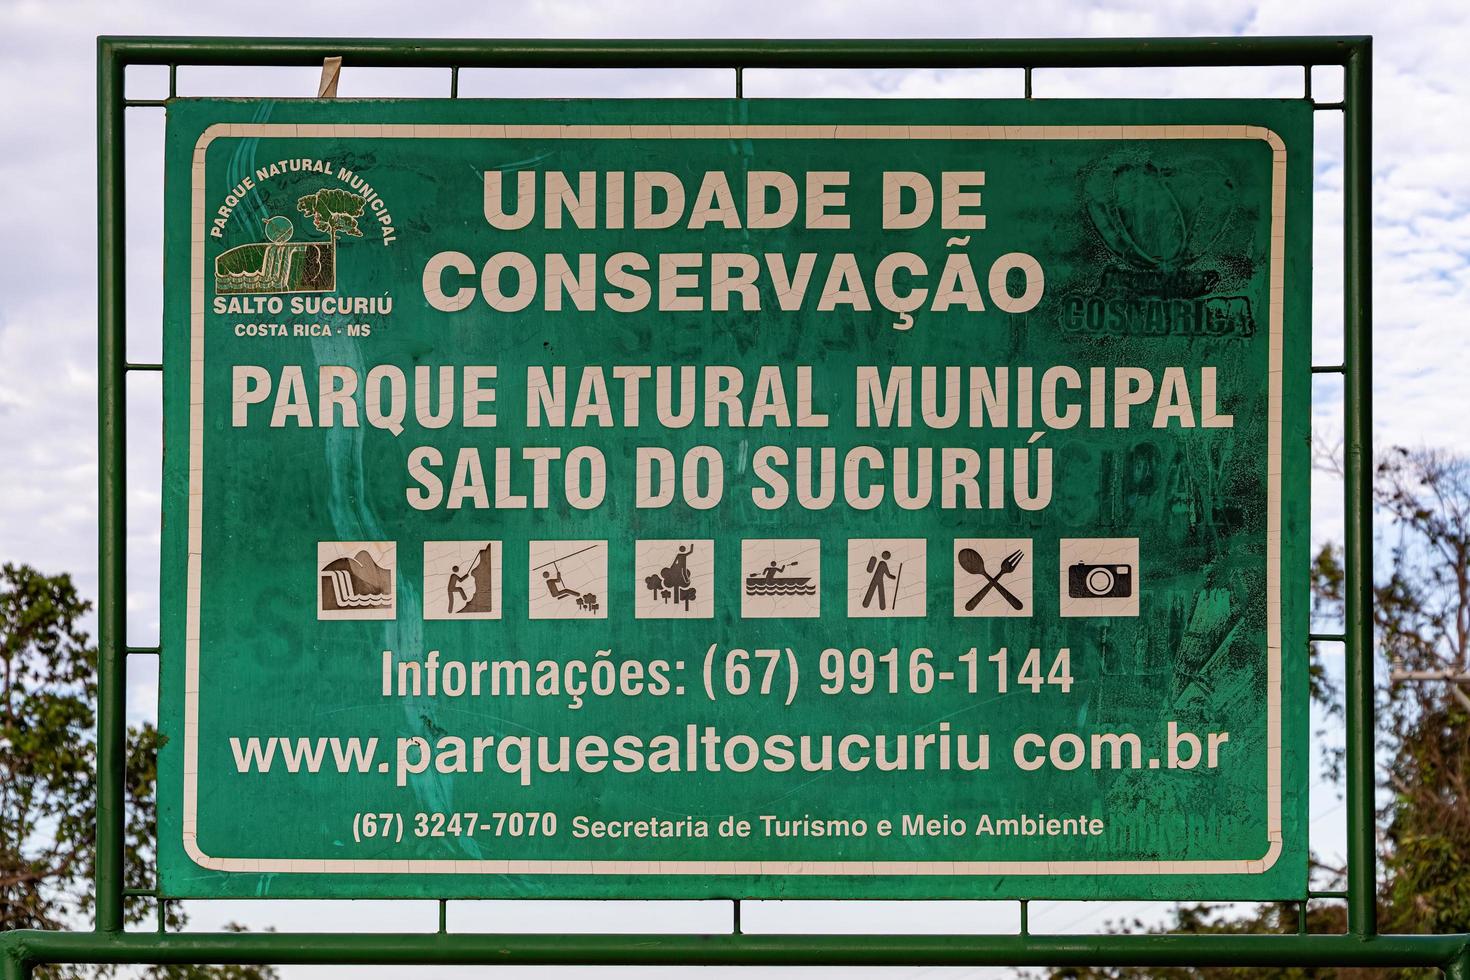 firmare l'ingresso nell'unità di conservazione salto do sucuriu in portoghese foto